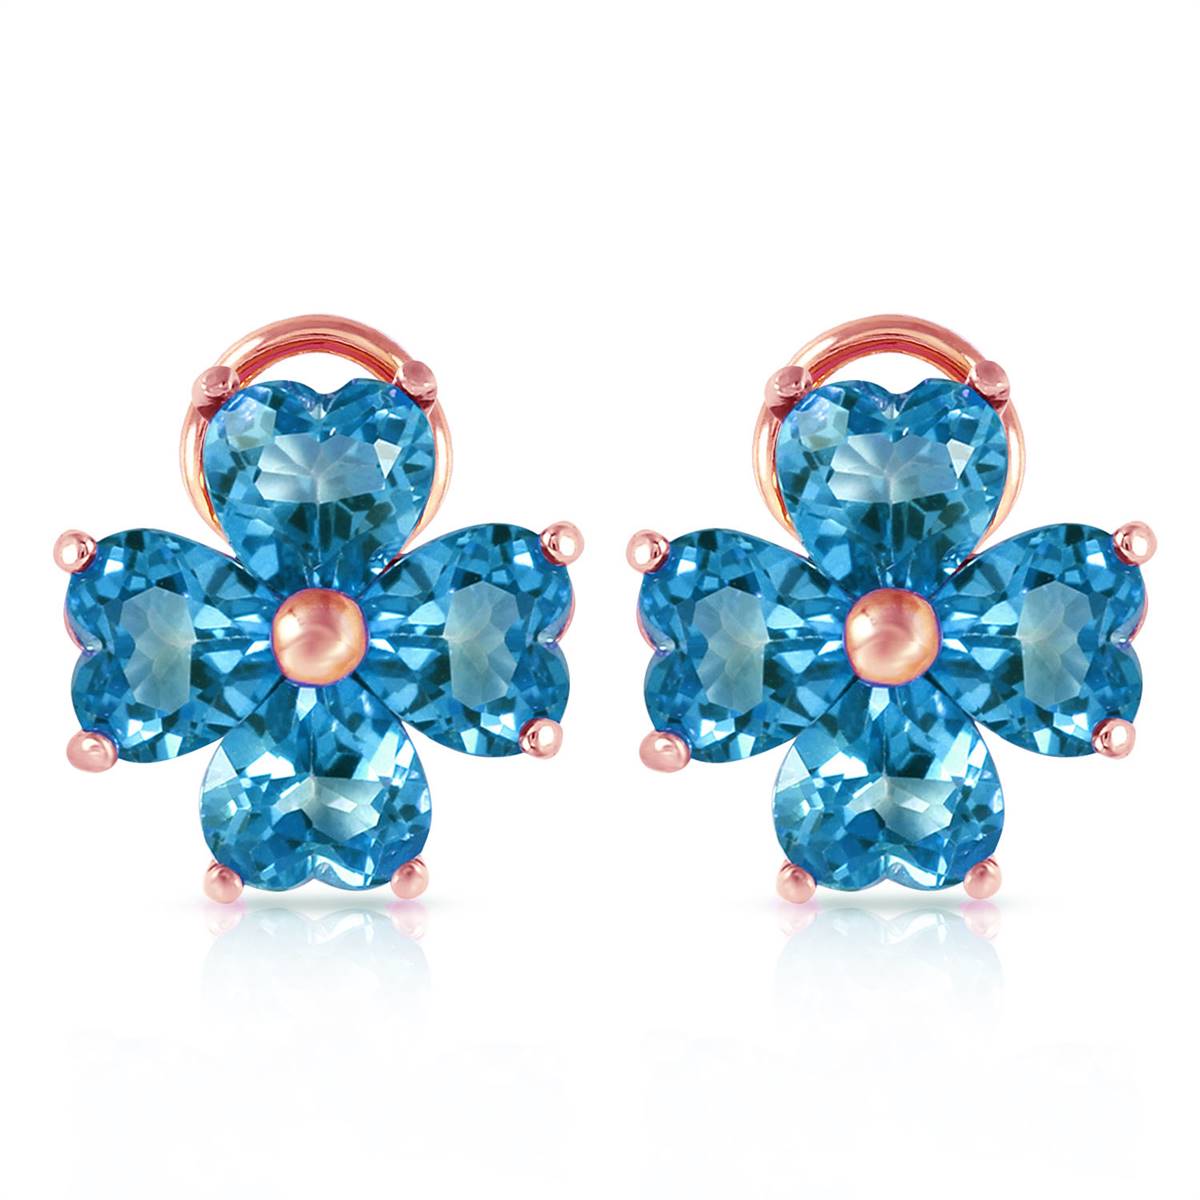 7.6 Carat 14K Solid Rose Gold Heart Cluster Blue Topaz Earrings